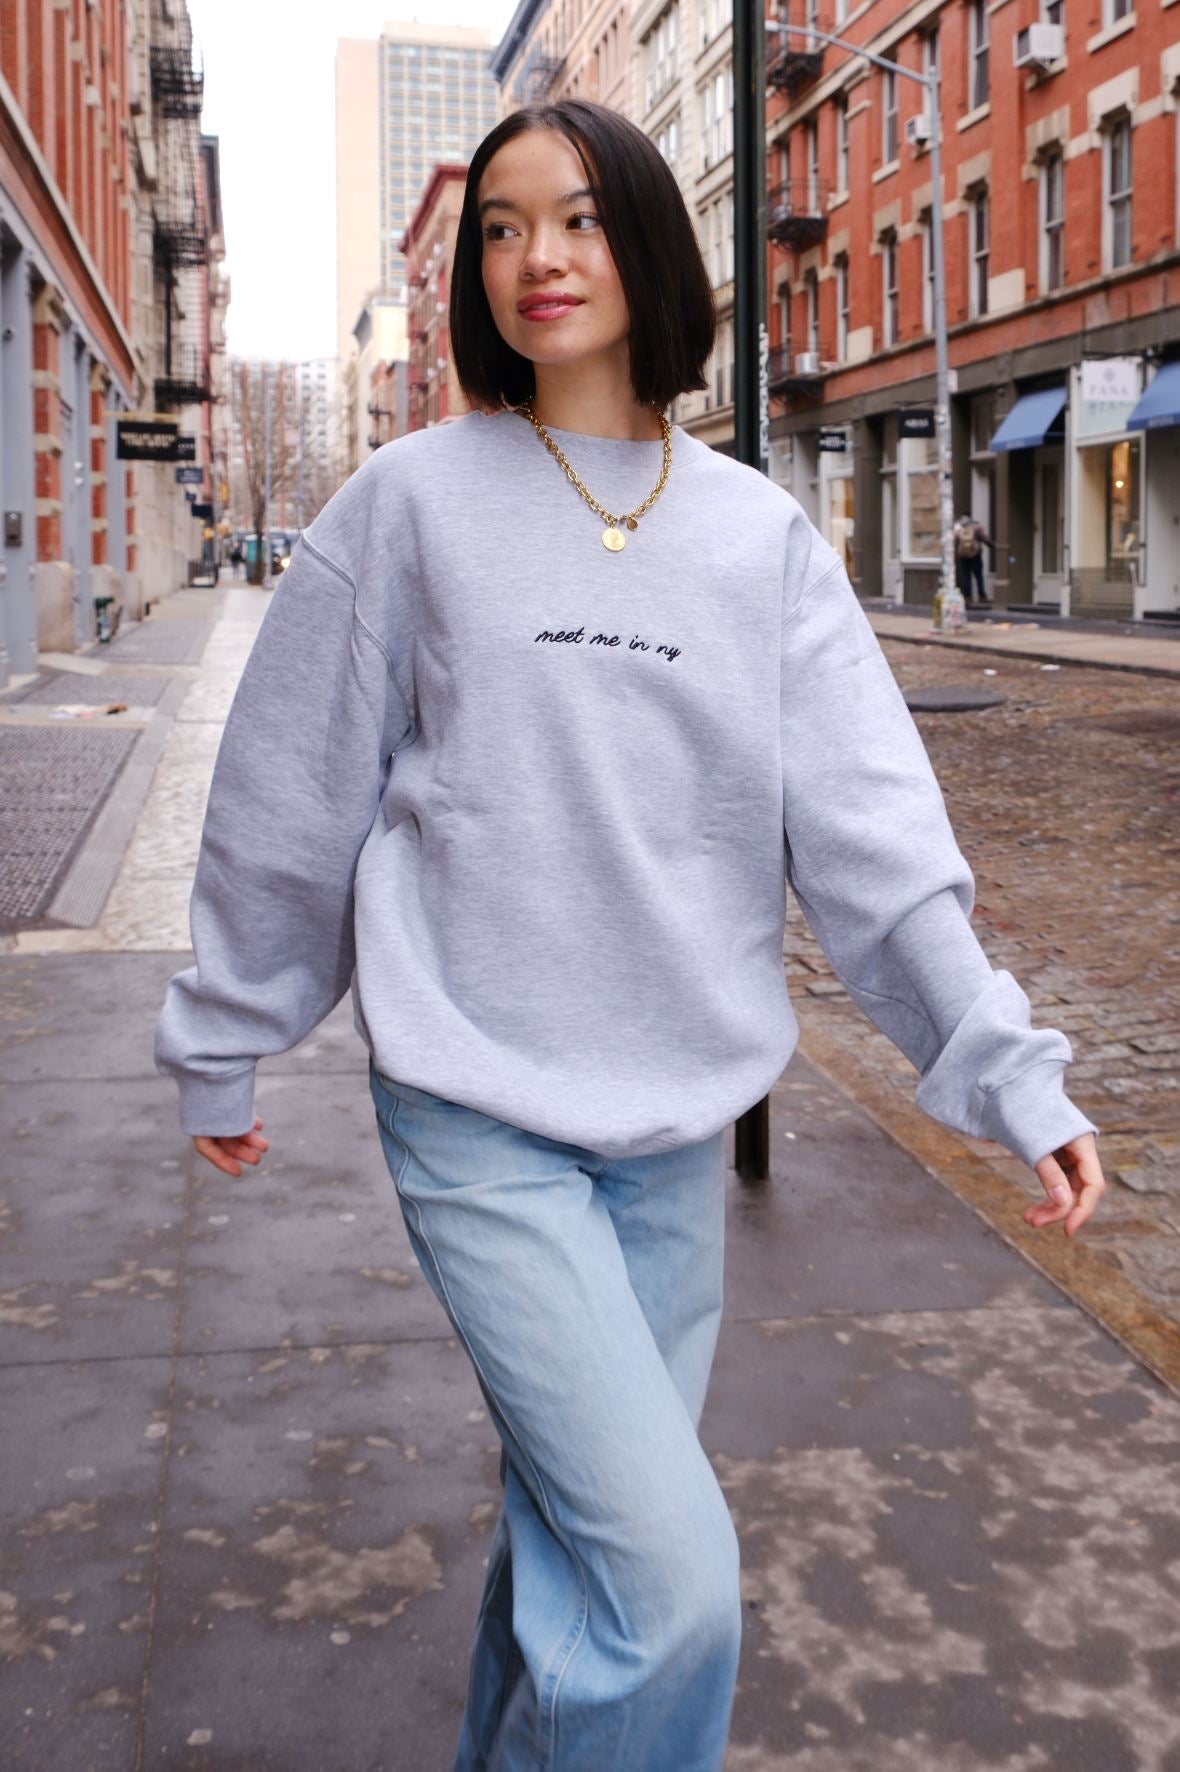 Meet Me in NY Embroidered Sweatshirt sweatshirt mure + grand 